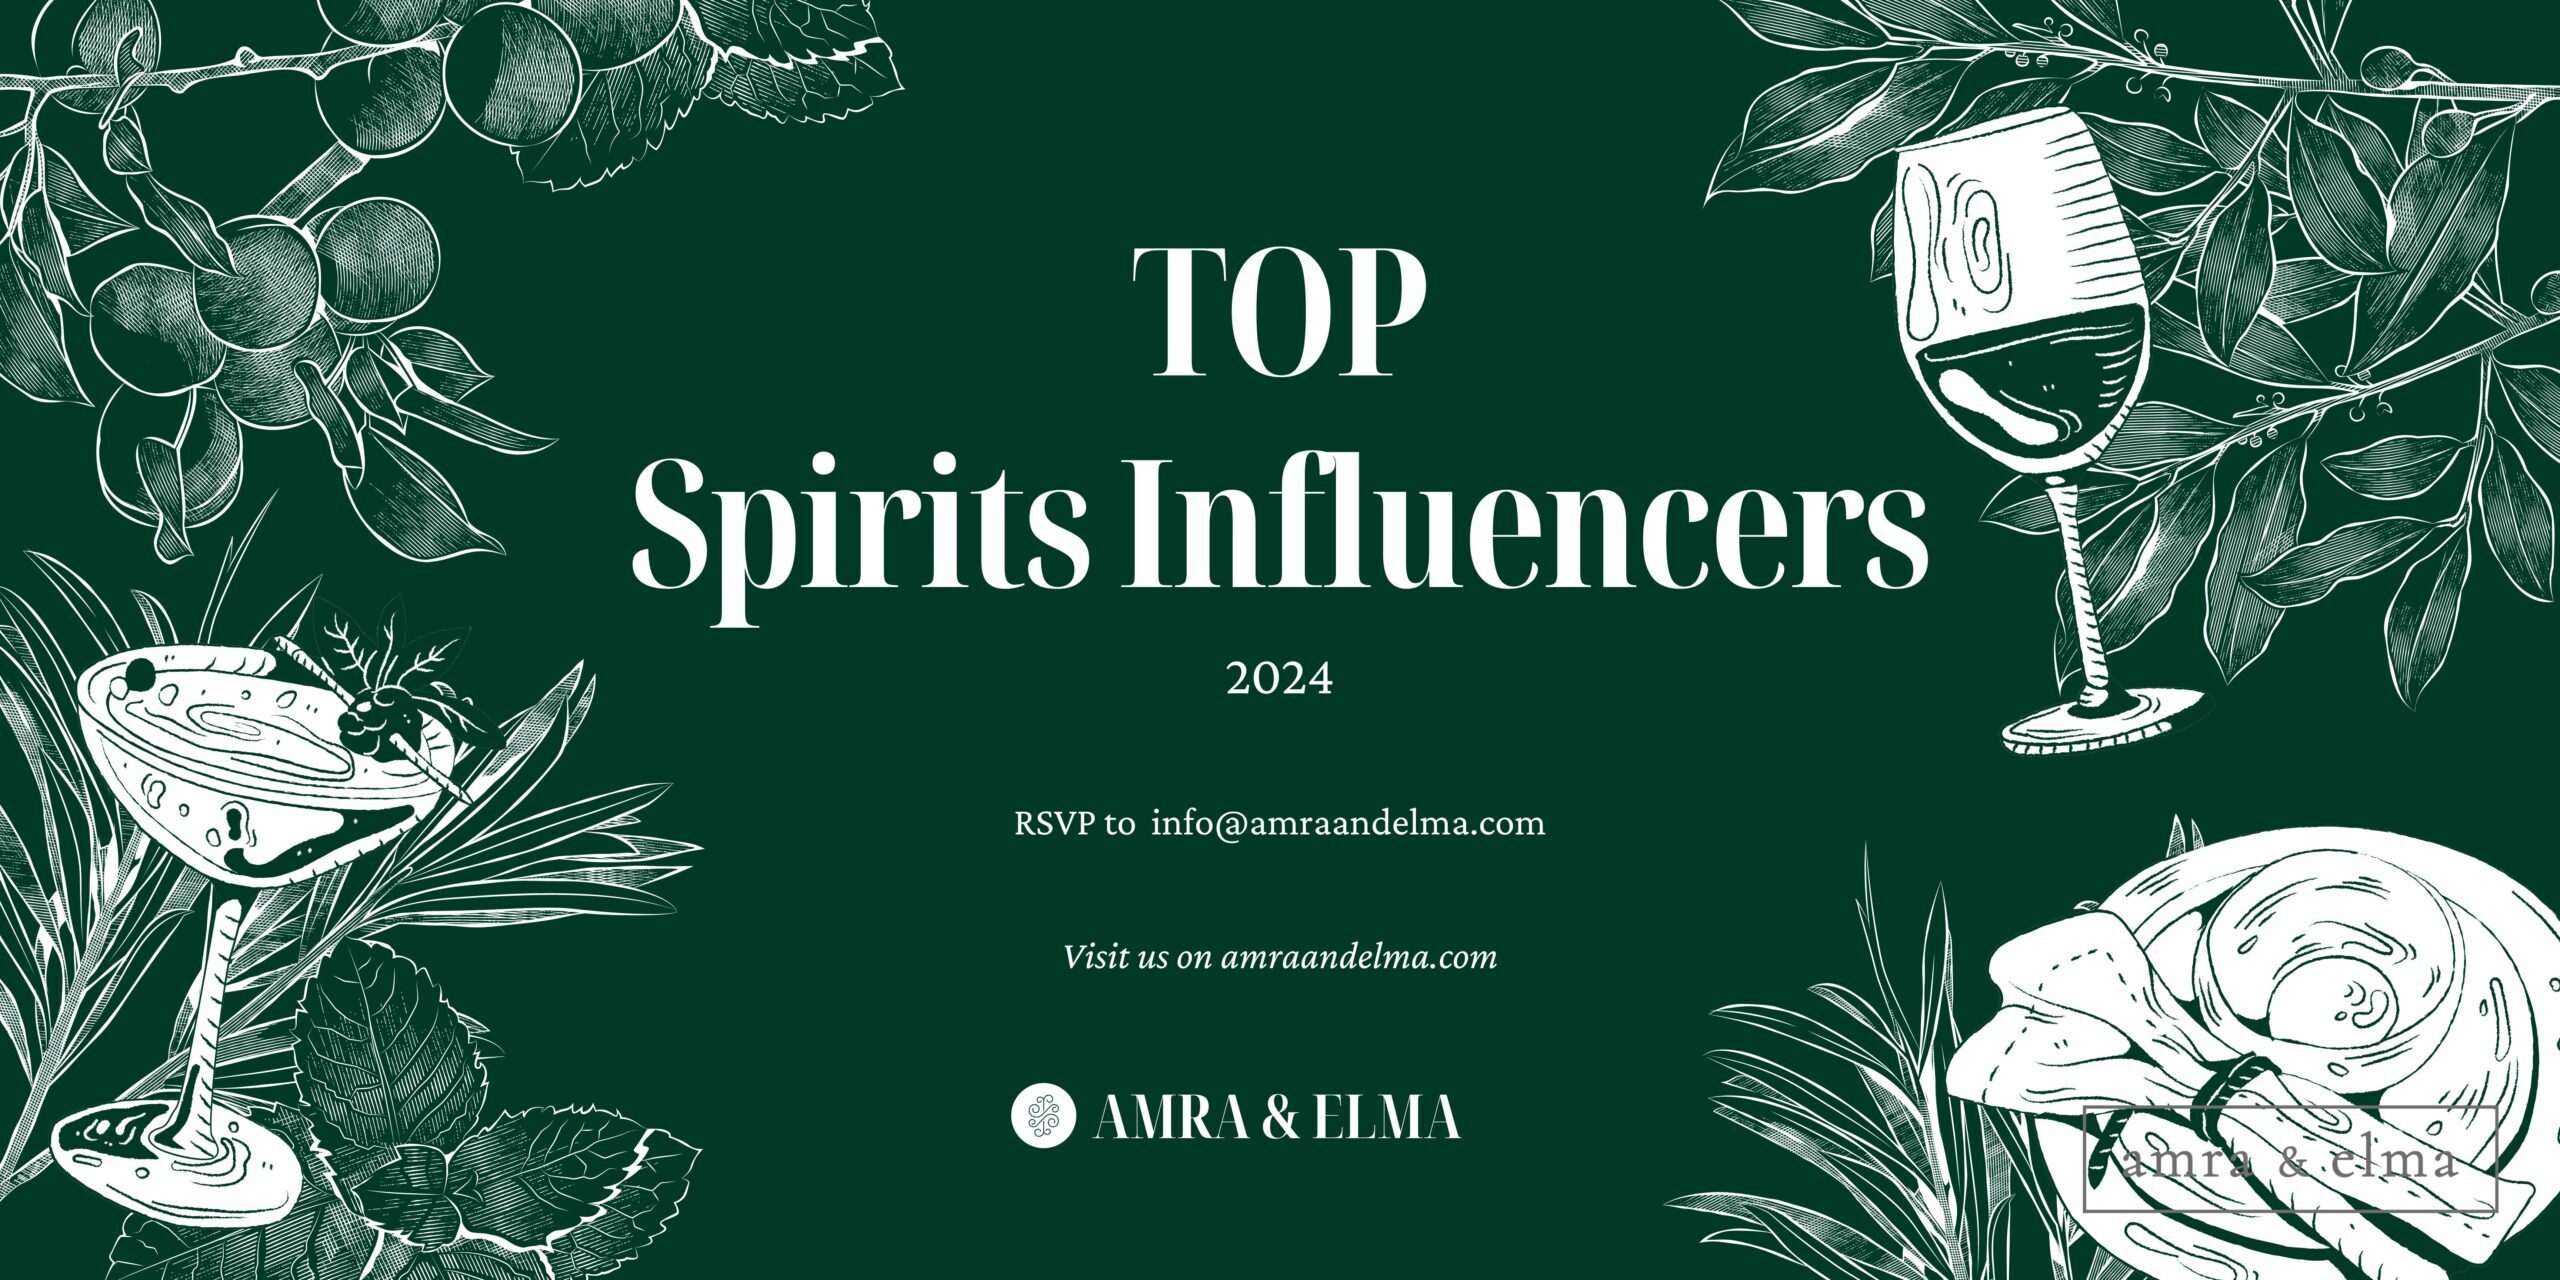 top spirits influencers 2024, top wine influencers 2024, top beverage influencers 2024, top food and beverage influencers 2024